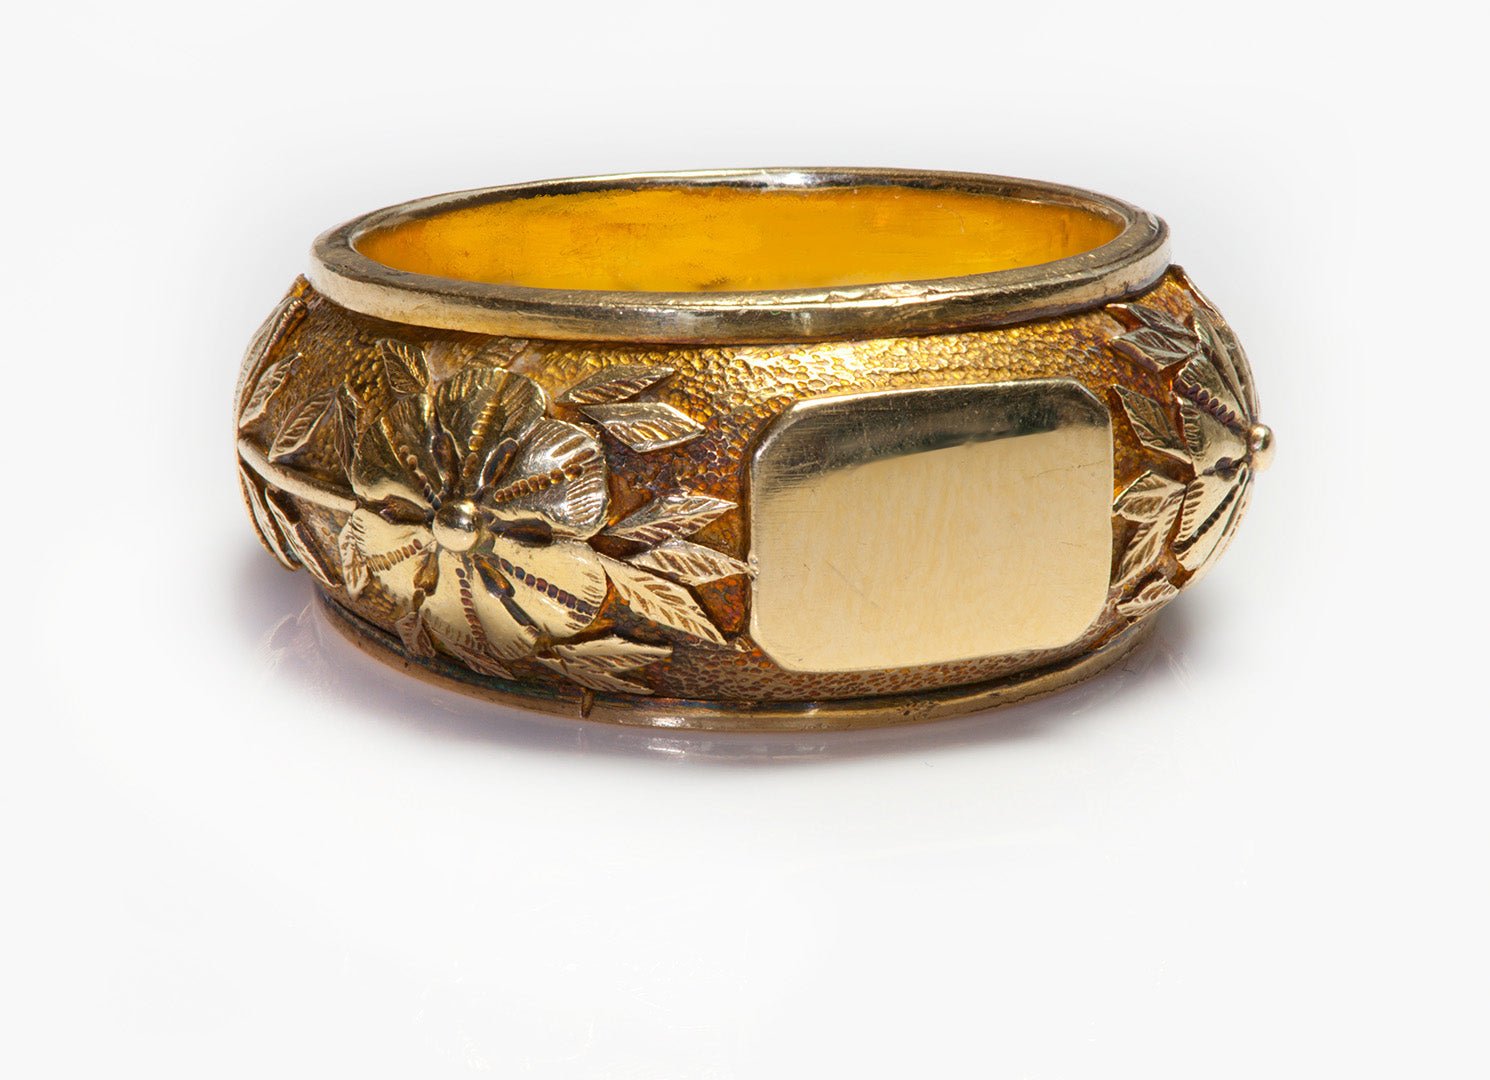 Antique 1850's 18K Yellow Gold Men's Ring